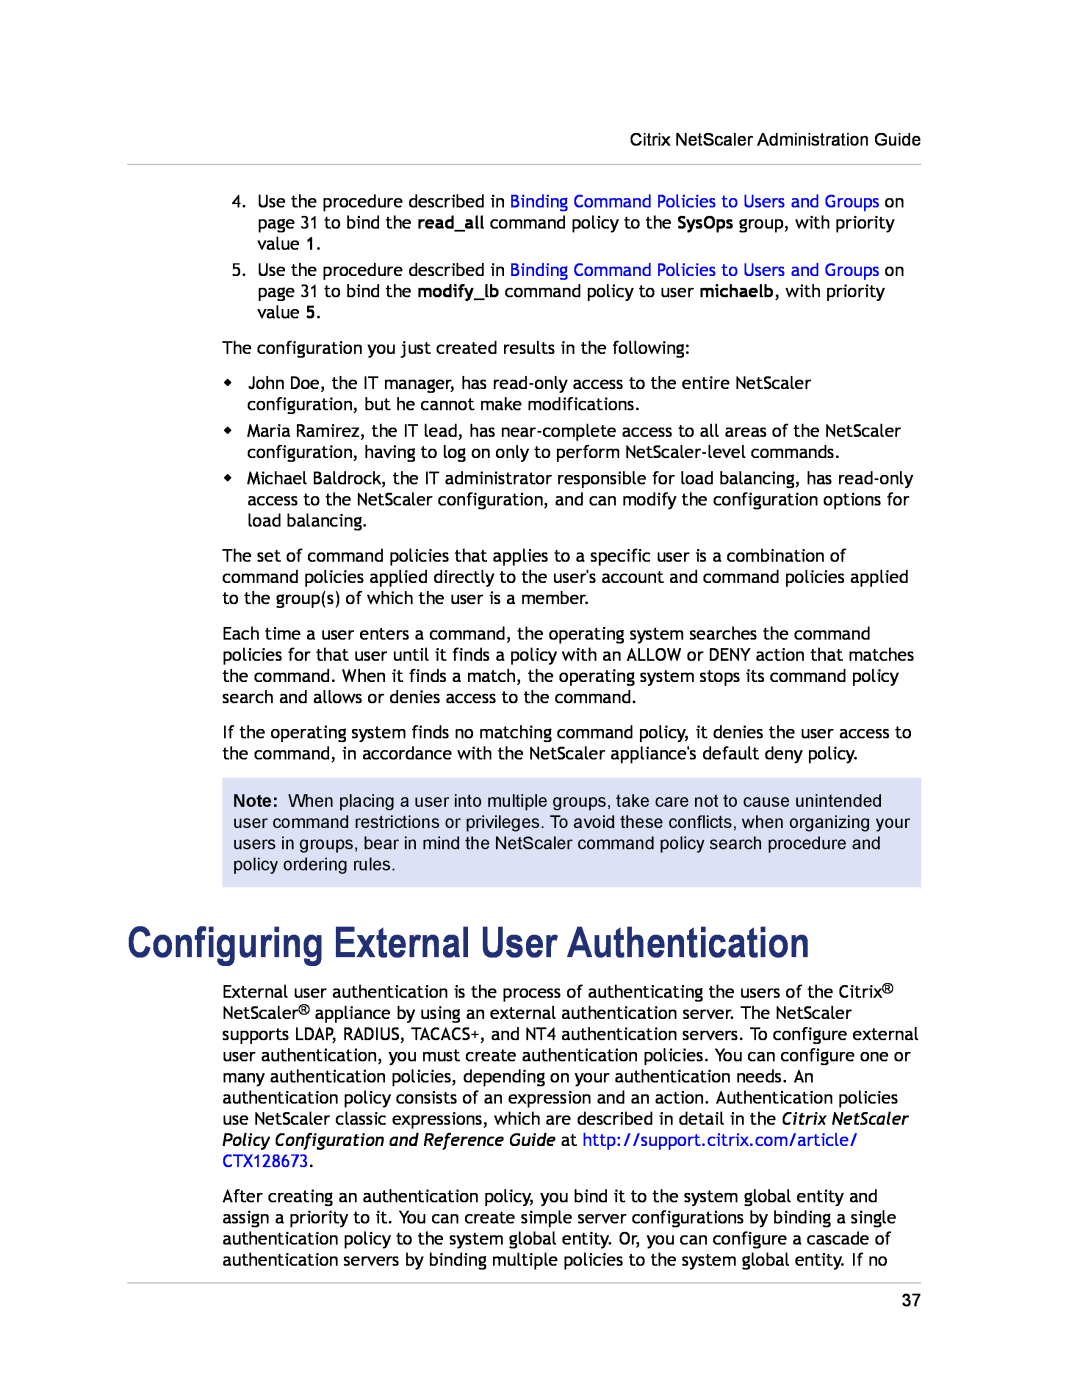 Citrix Systems CITRIX NETSCALER 9.3 manual Configuring External User Authentication 